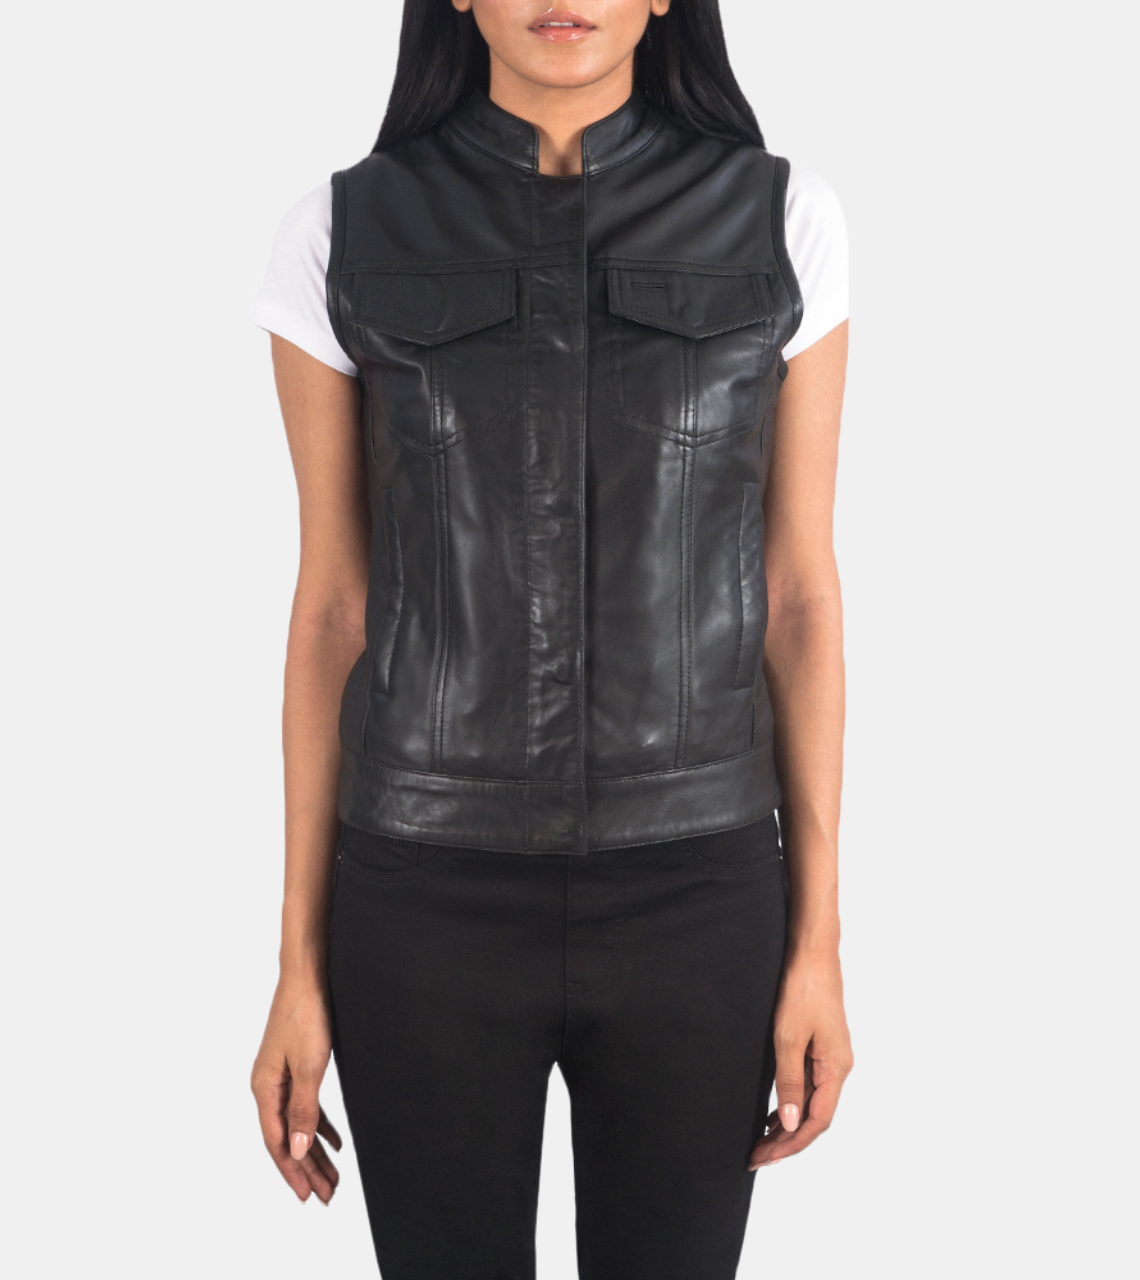 Arihemis Women's Black Leather Vest